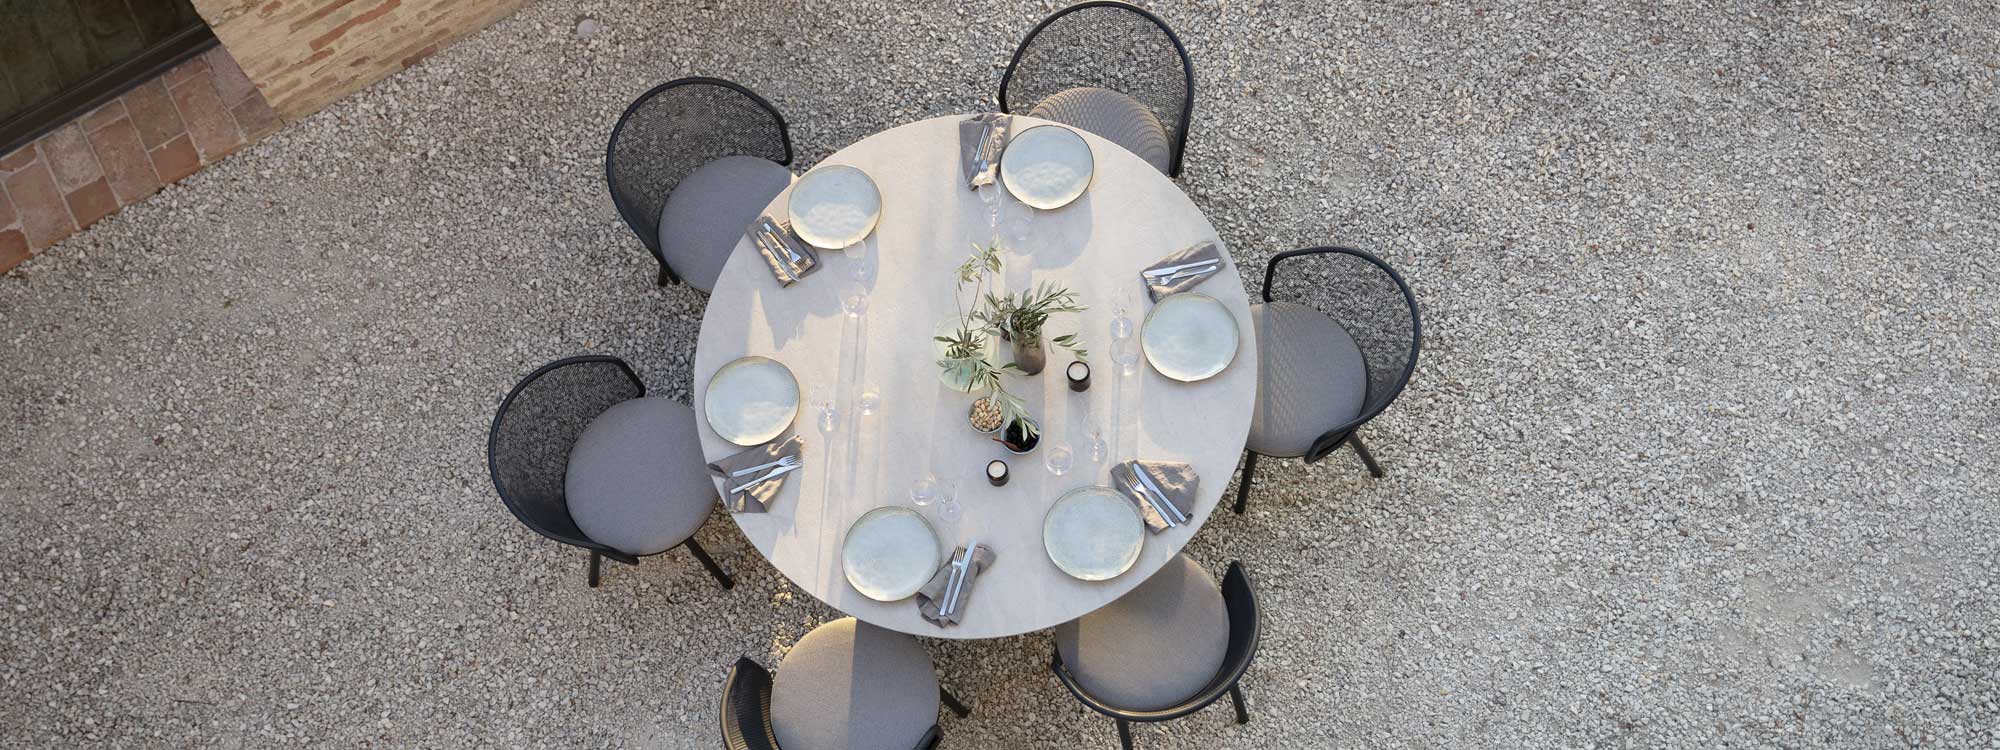 Birdseye view of Branta circular outdoor table and Baza garden chairs in gravel courtyard